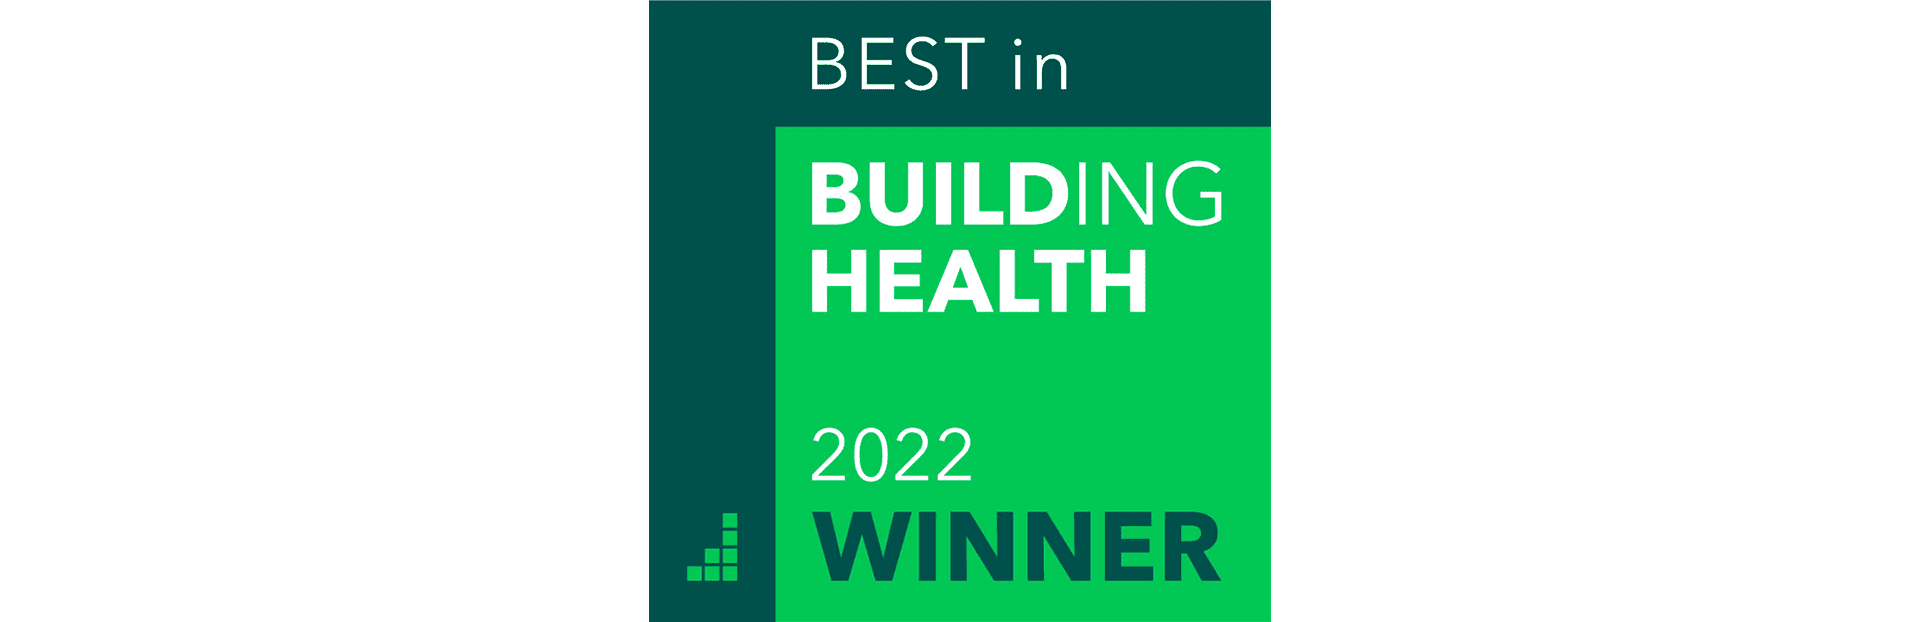 Best in Building Health - 2022 Winner